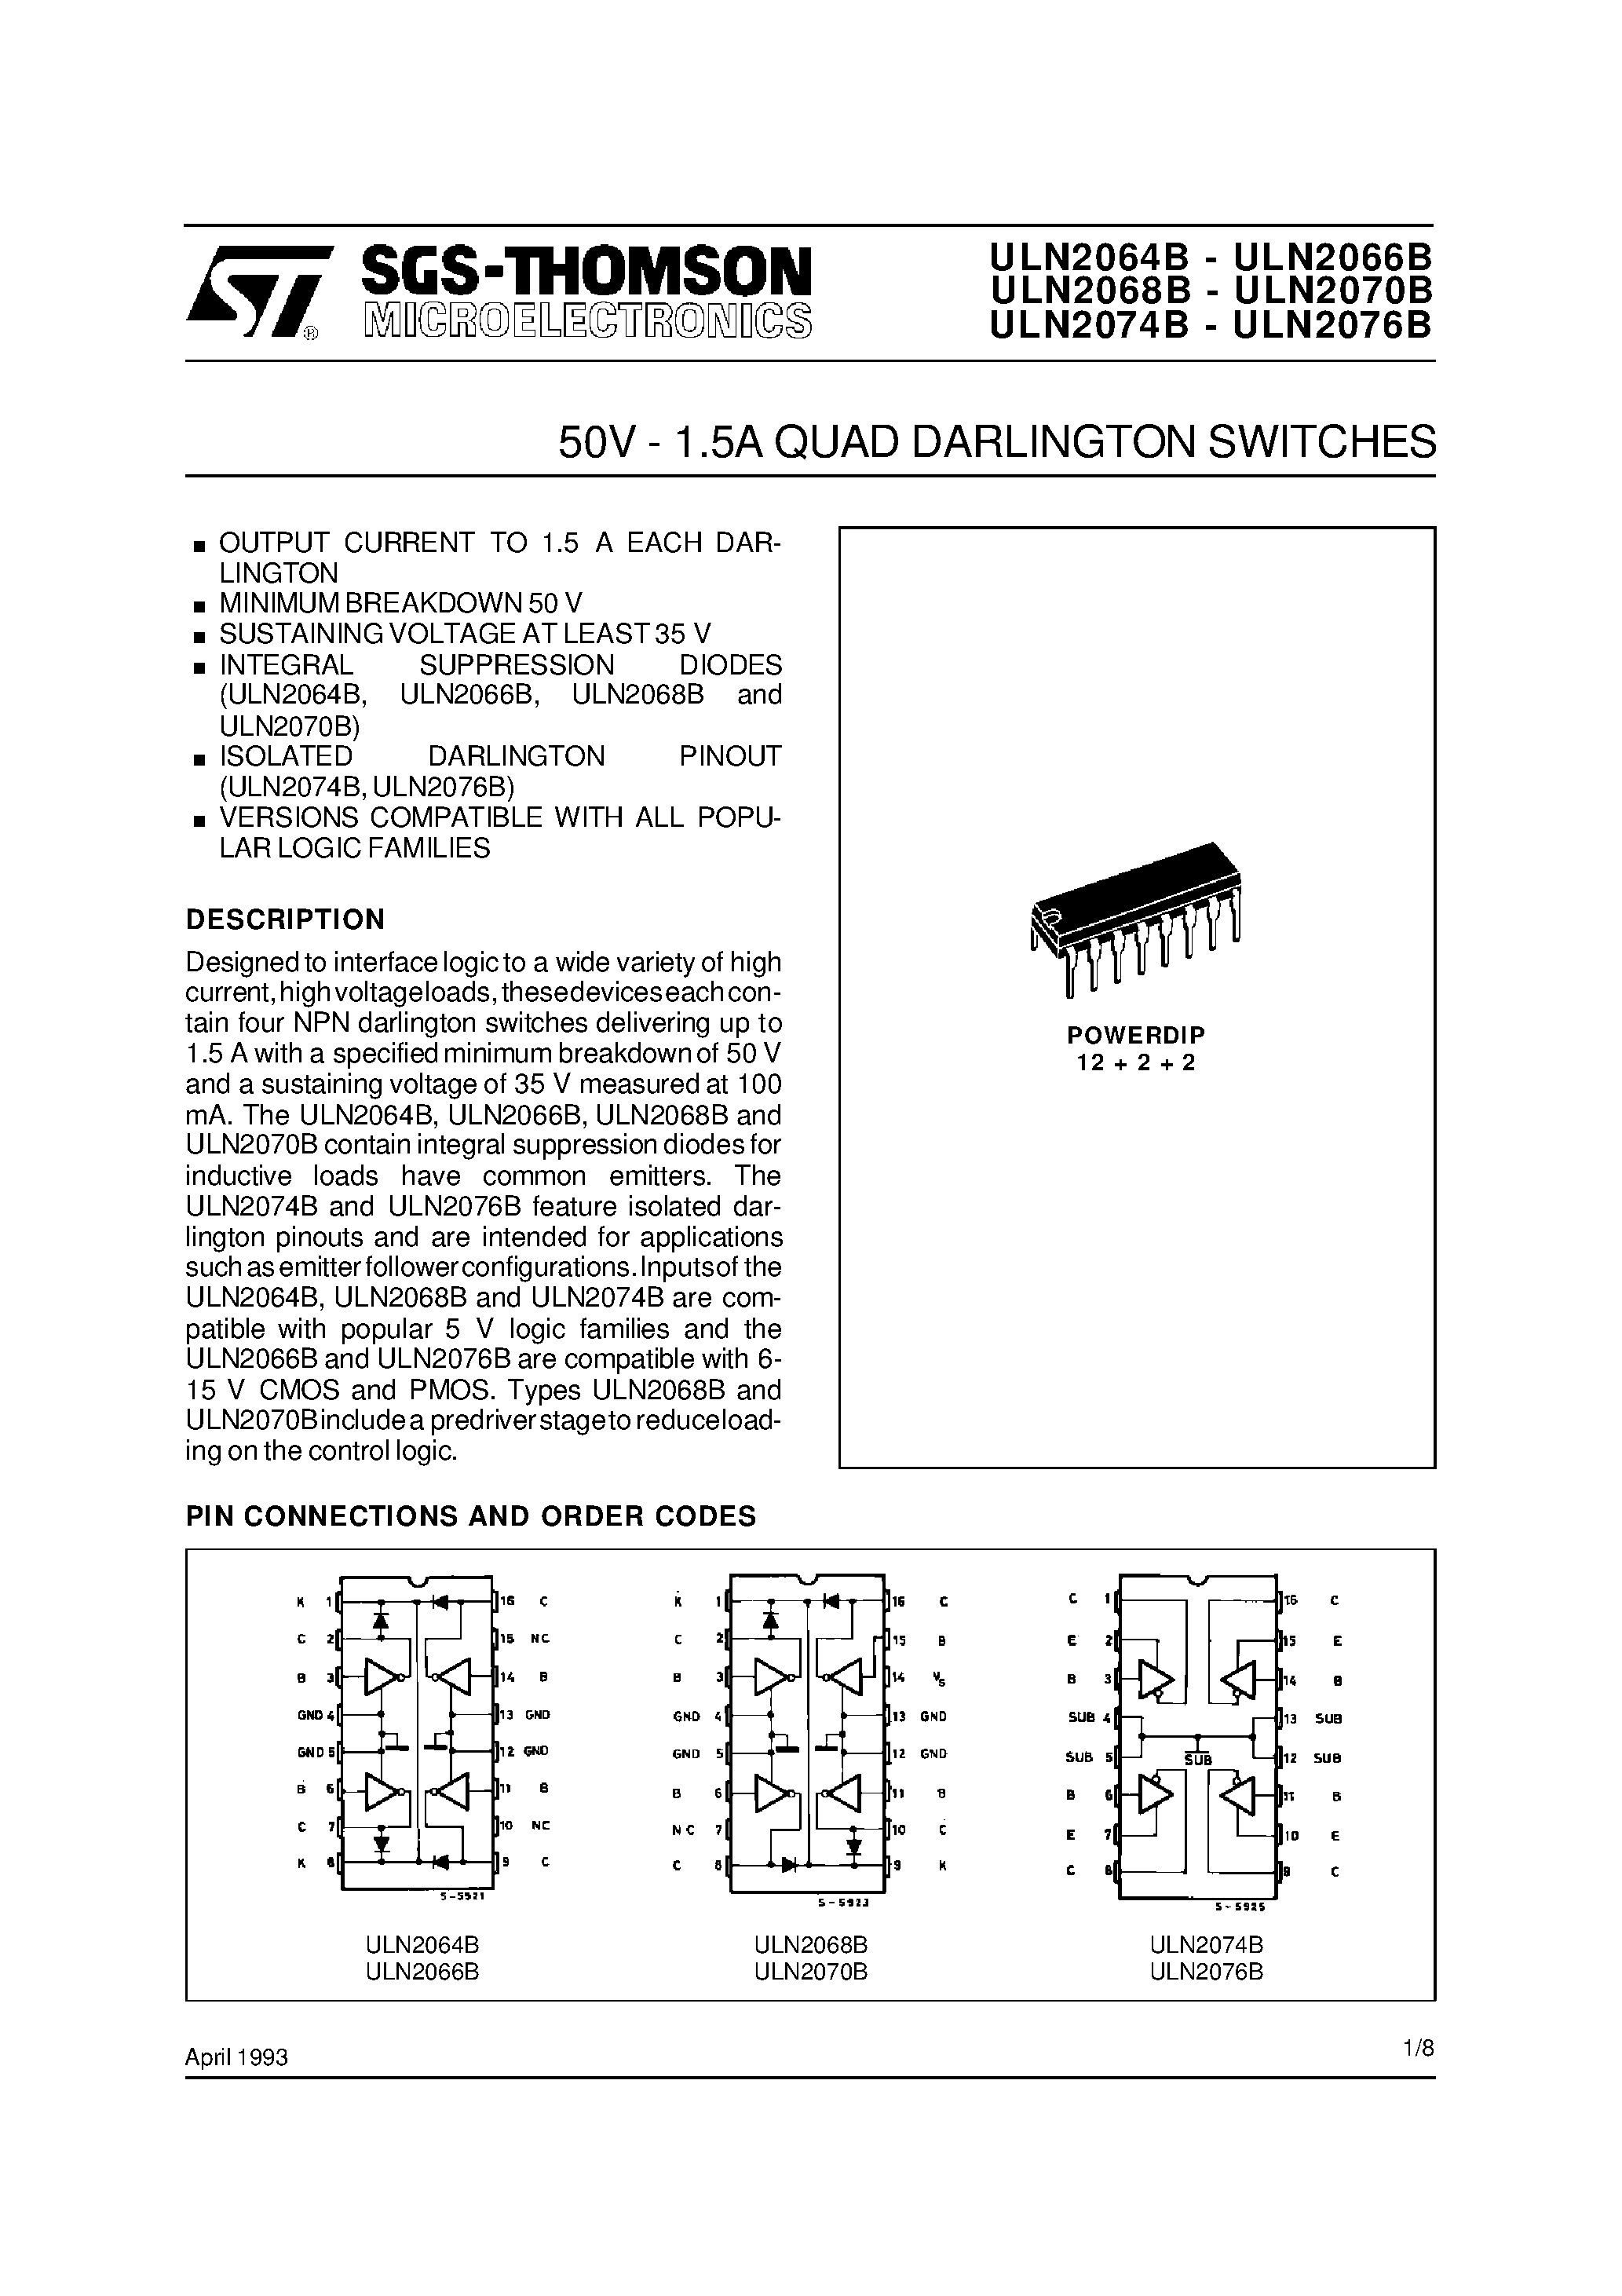 Datasheet ULN2070B - 50V - 1.5A QUAD DARLINGTON SWITCHES page 1